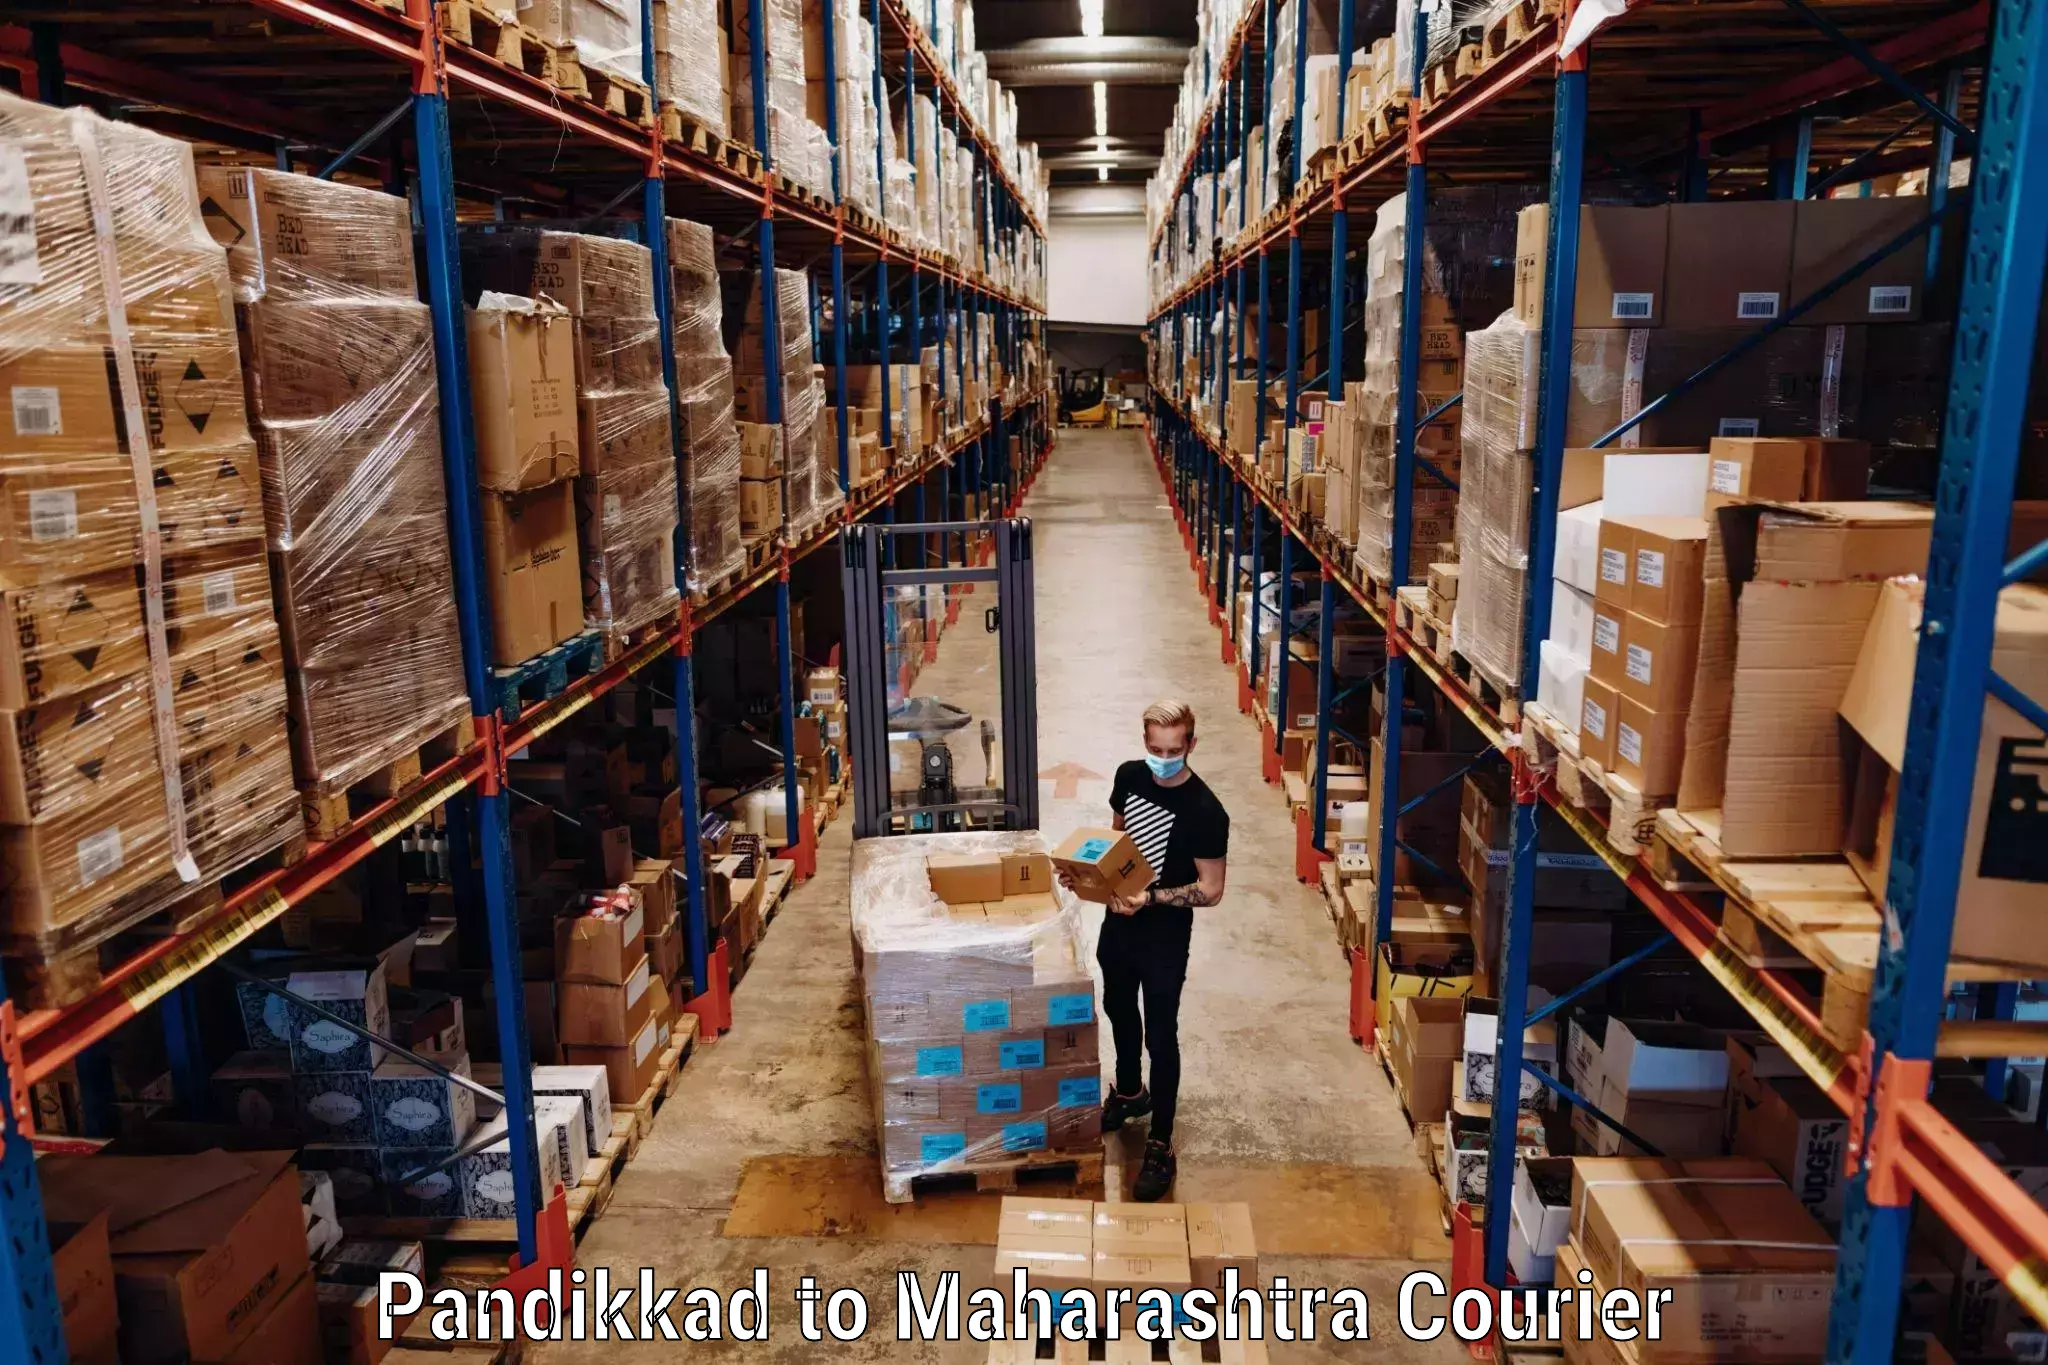 Luggage shipment specialists Pandikkad to Lonar